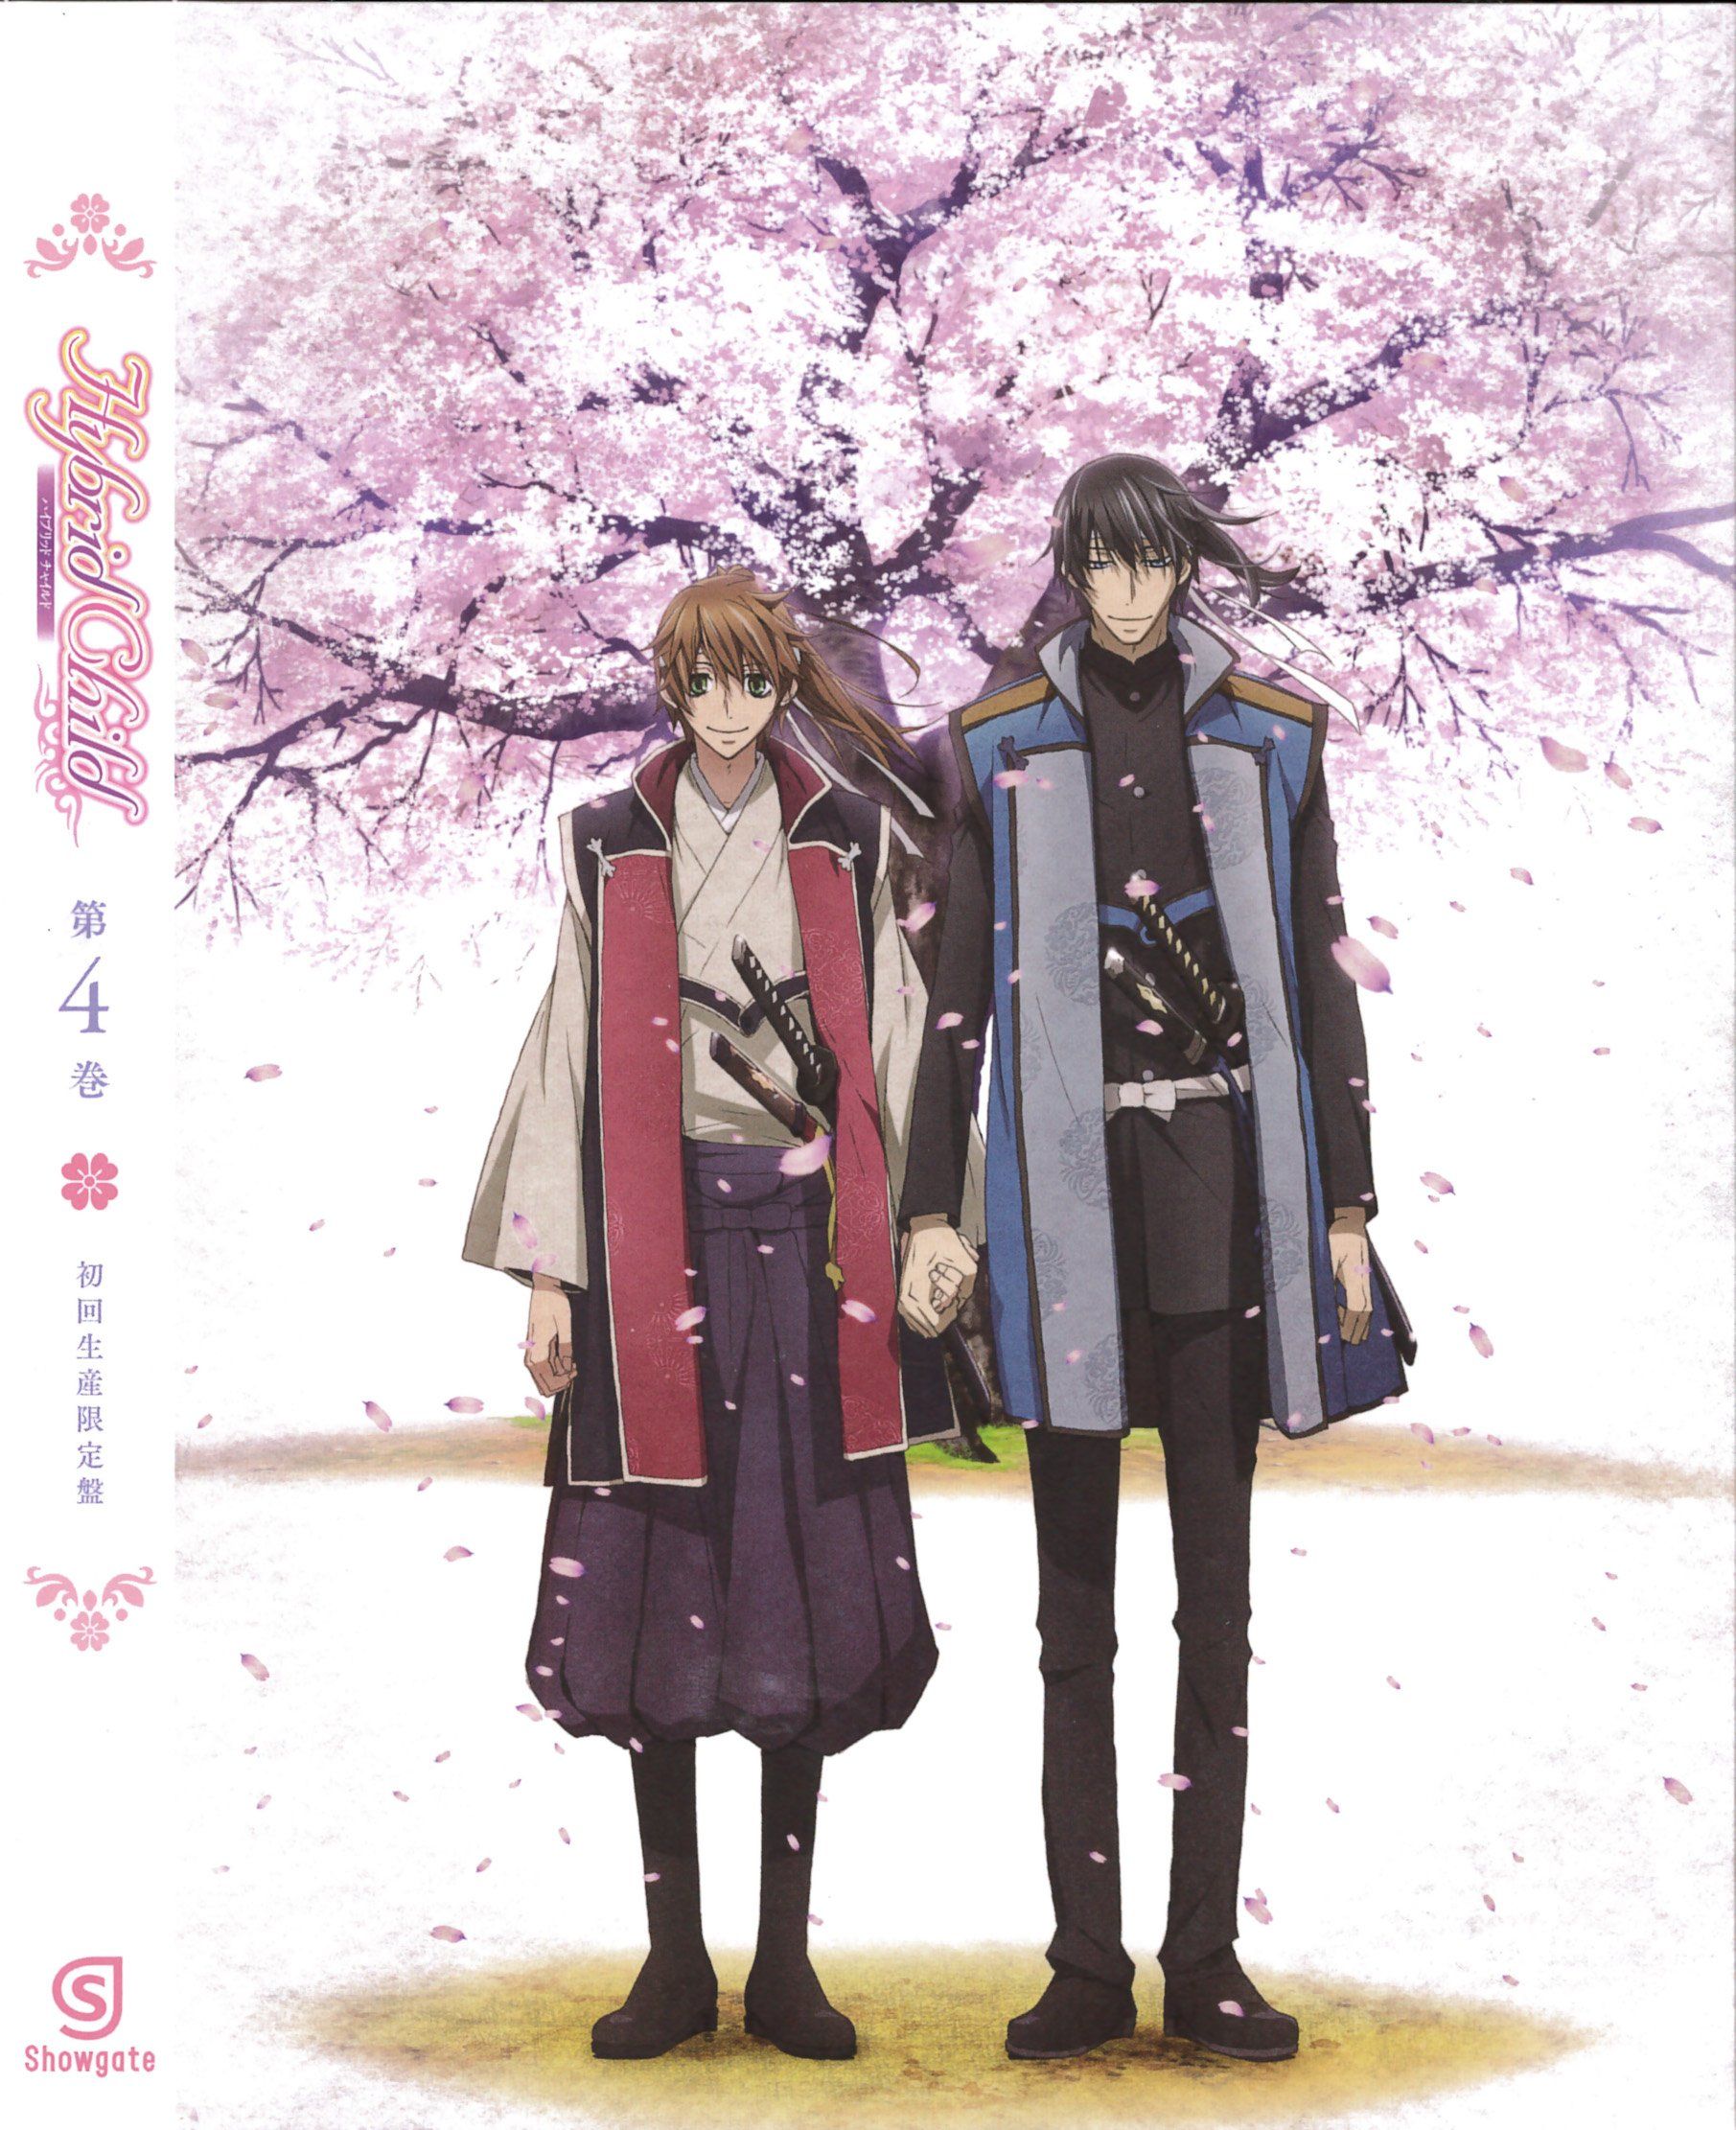 anime Shungiku Nakamura Mangaka Hybrid Child Series DVD Cover Source wallpaperx2222